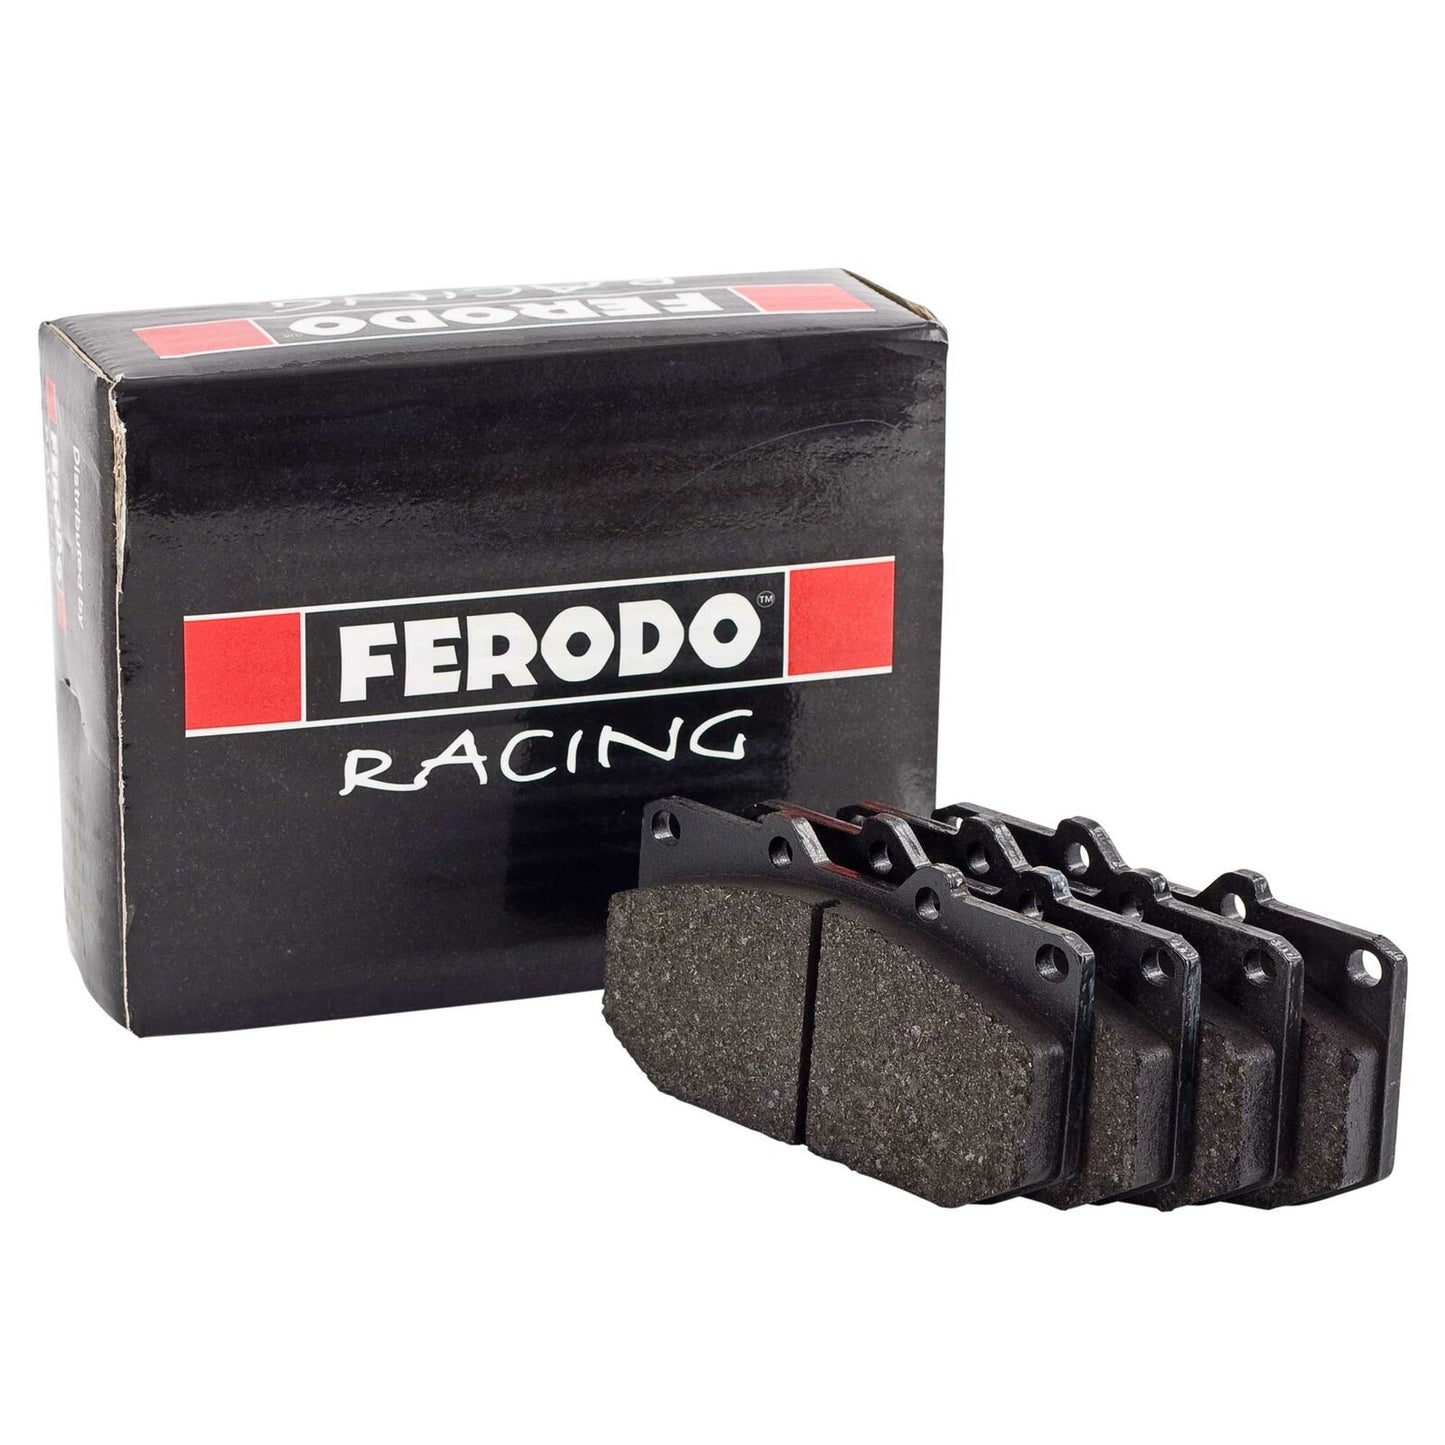 Ferodo DS2500 Brake Pads Front E9x X1 Performance Brakes